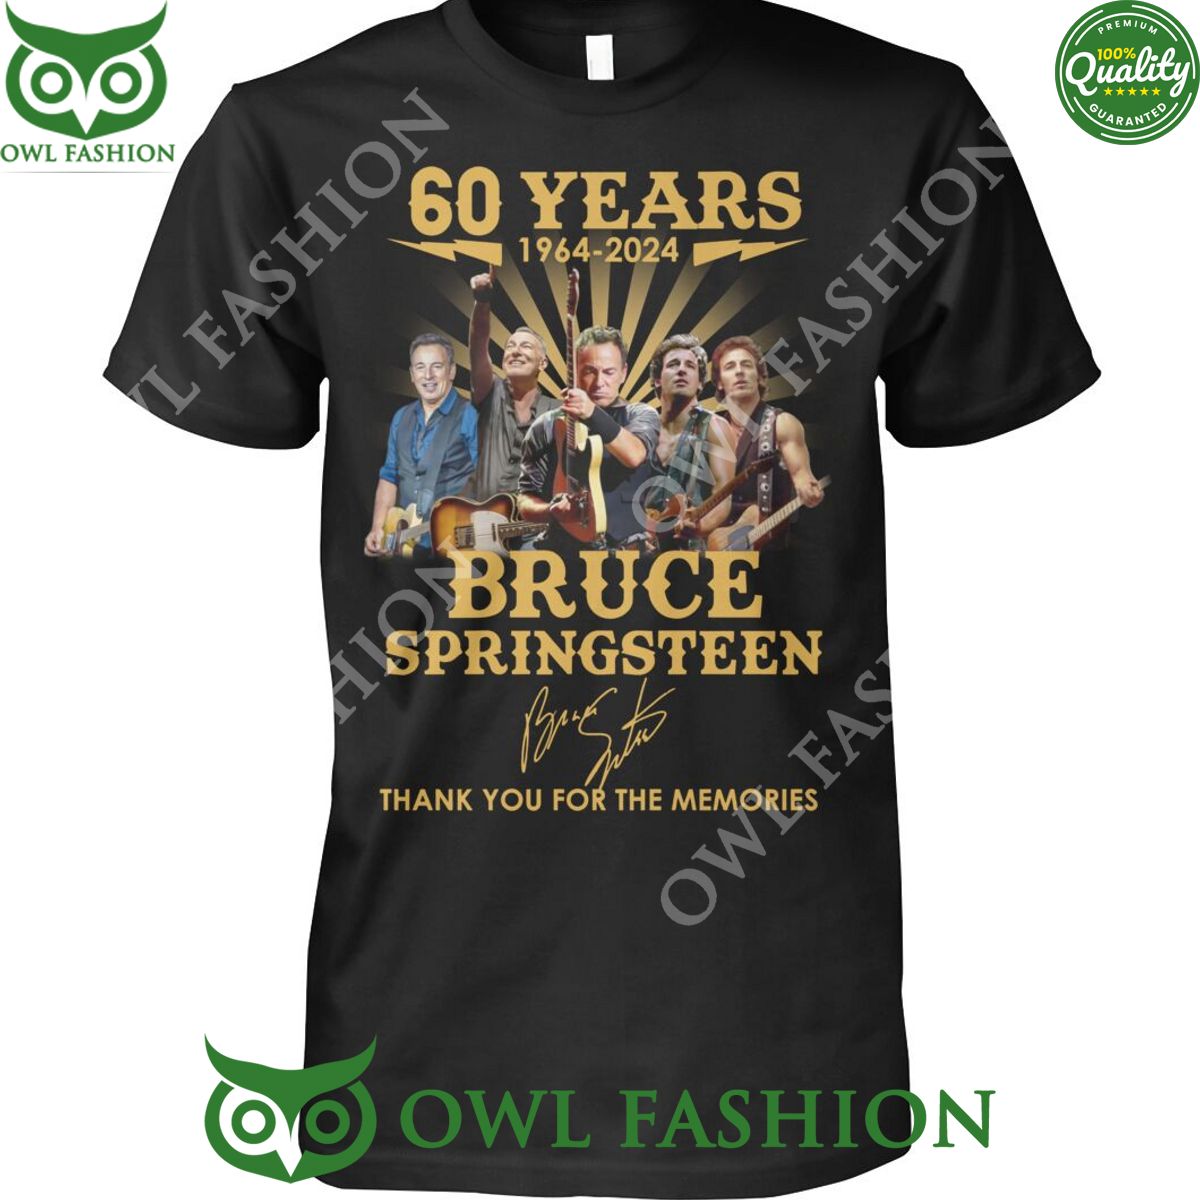 bruce springsteen 60 years 1964 2024 memories rock singer t shirt 1 IU8hT.jpg